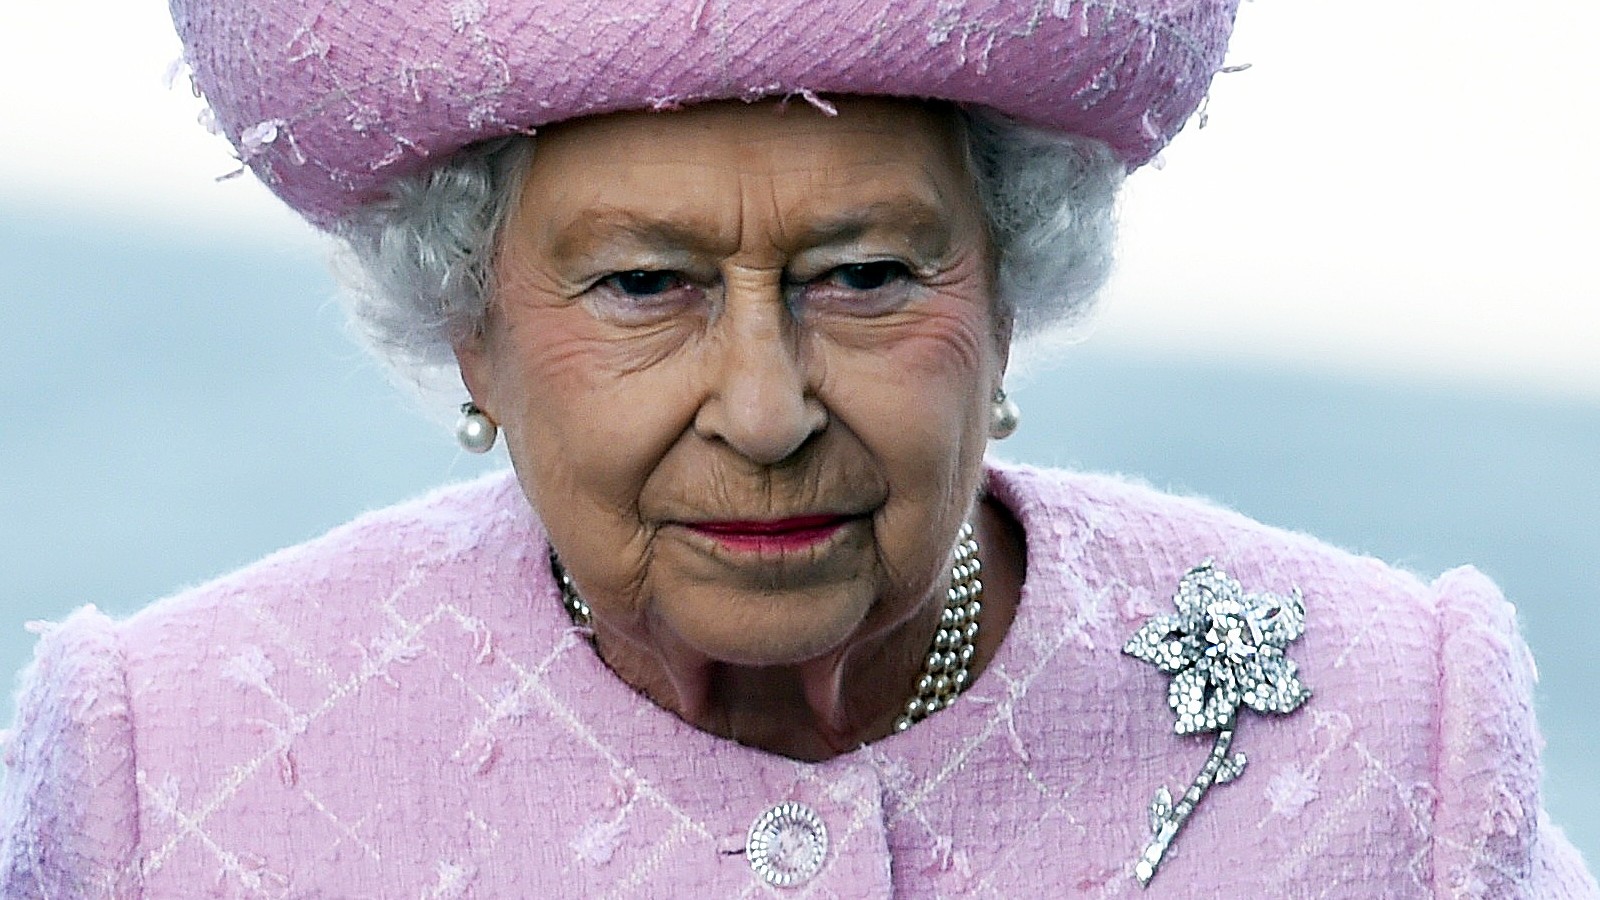 Royal jewels: Queen's Williamson pink diamond brooch